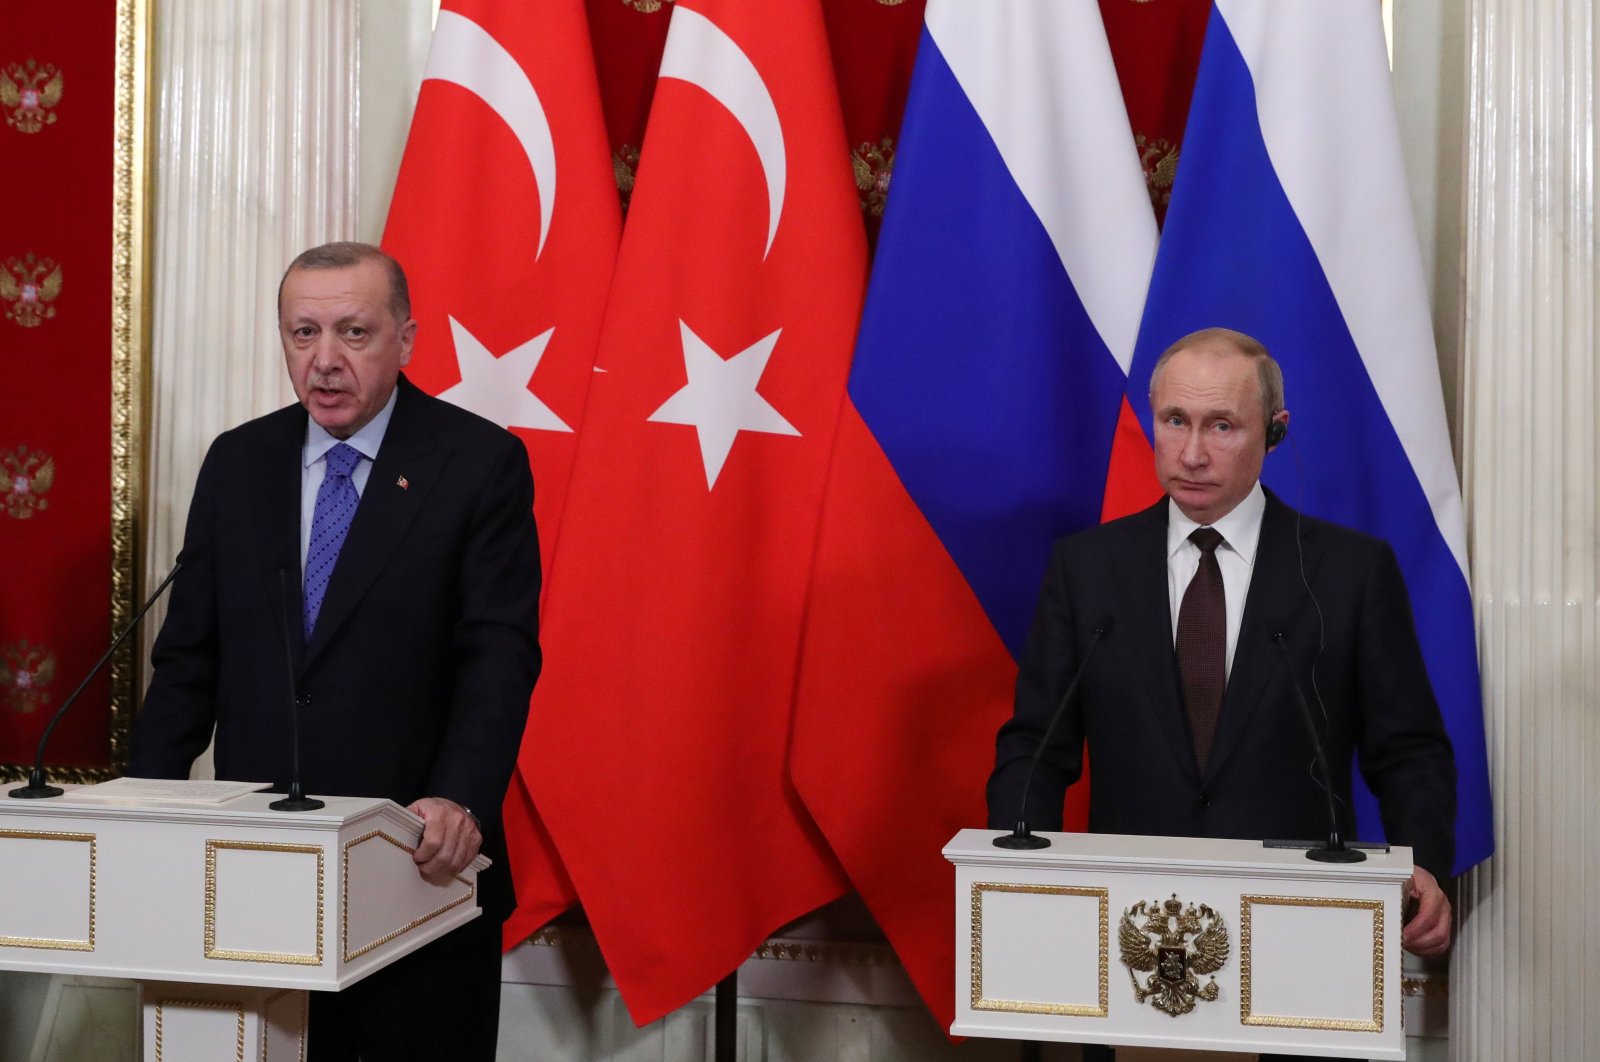 President Recep Tayyip Erdoğan (L) and his Russian counterpart Vladimir Putin attend a news conference following their talks in Moscow, Russia March 5, 2020. (Sputnik / Mikhail Klimentyev / Kremlin via Reuters)